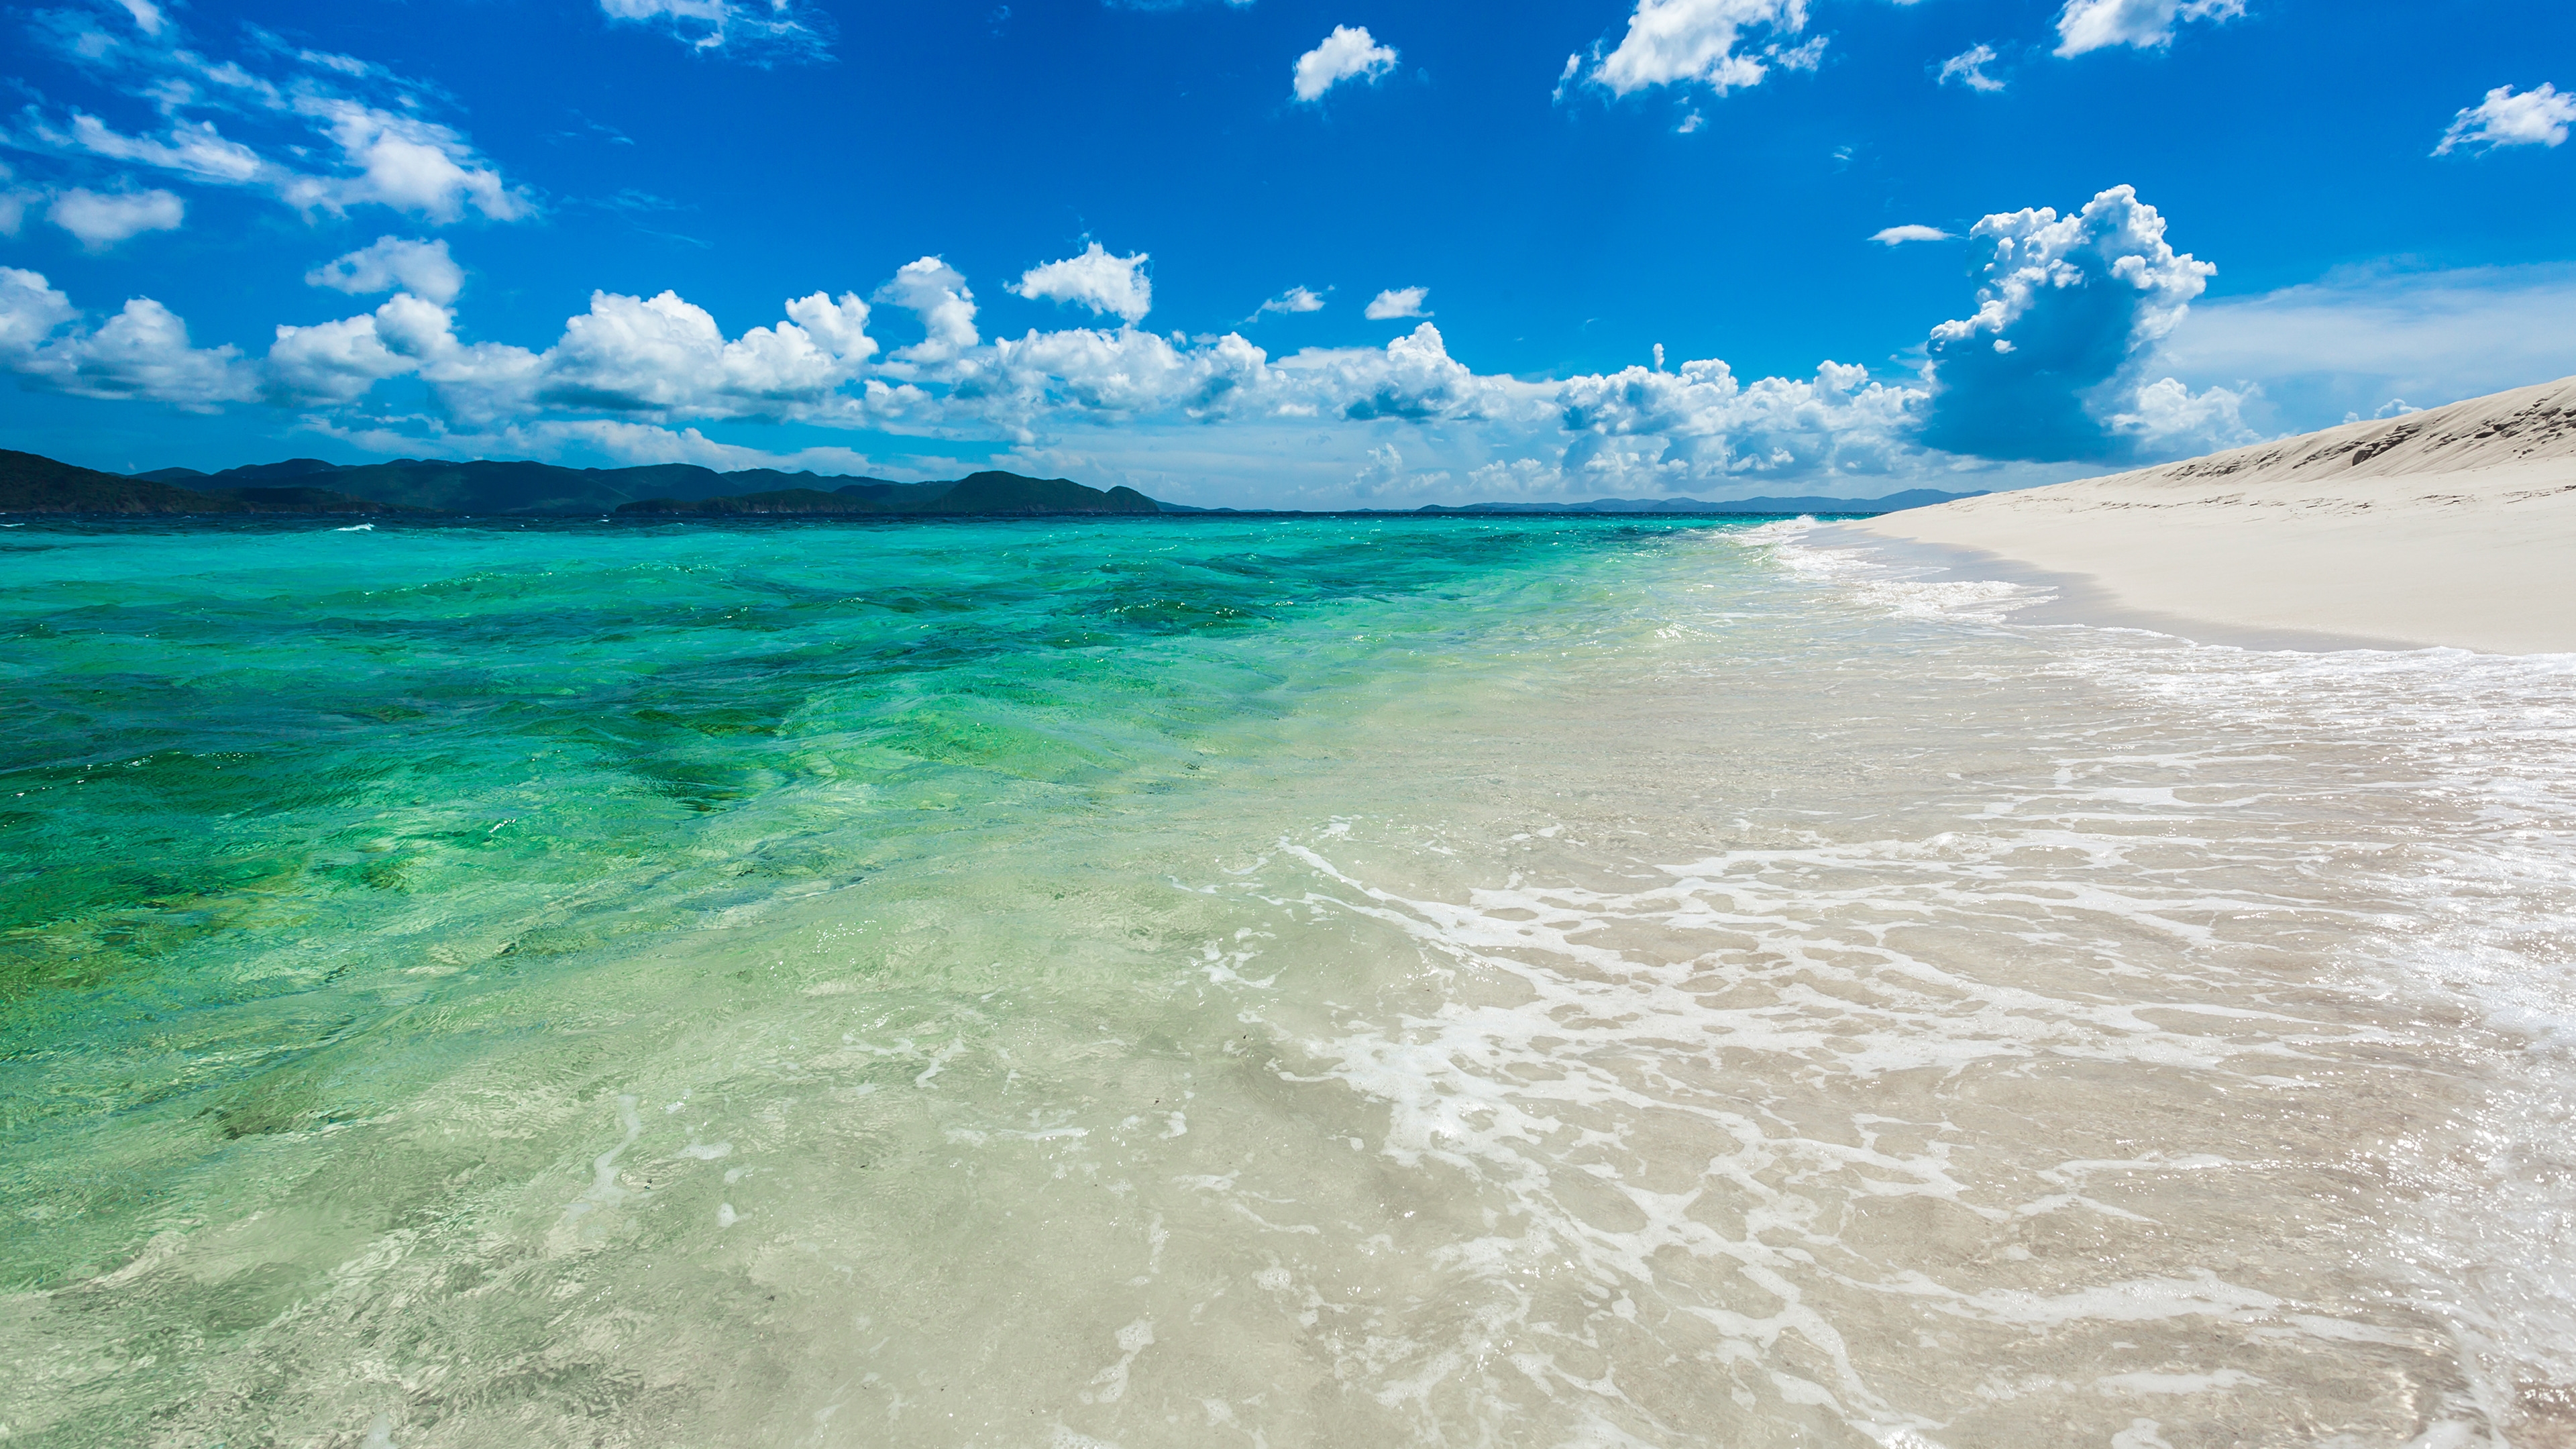 Sandy Cay Island for 3840 x 2160 Ultra HD resolution